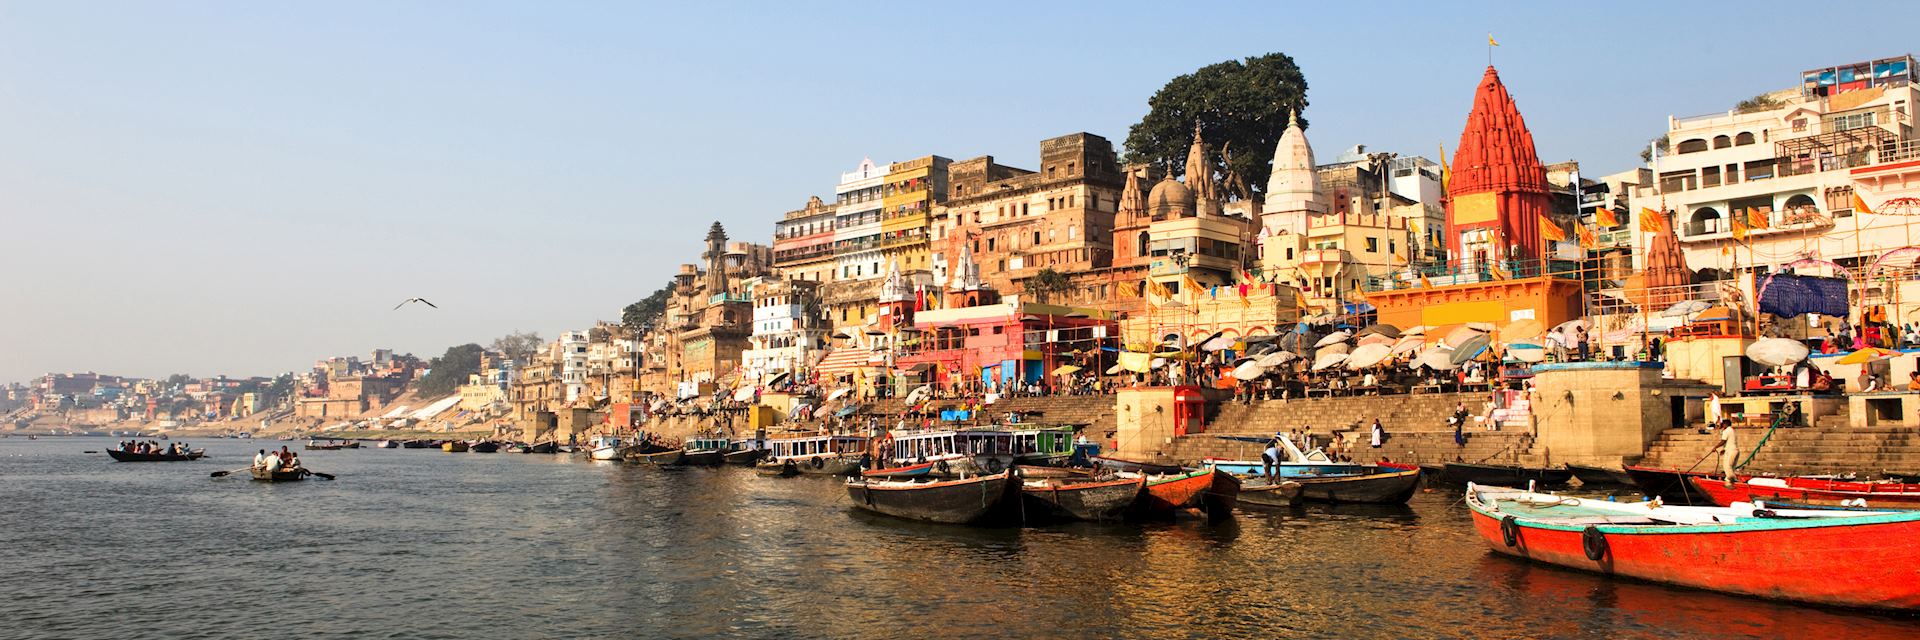 Riverside ghats, Varanasi, India 